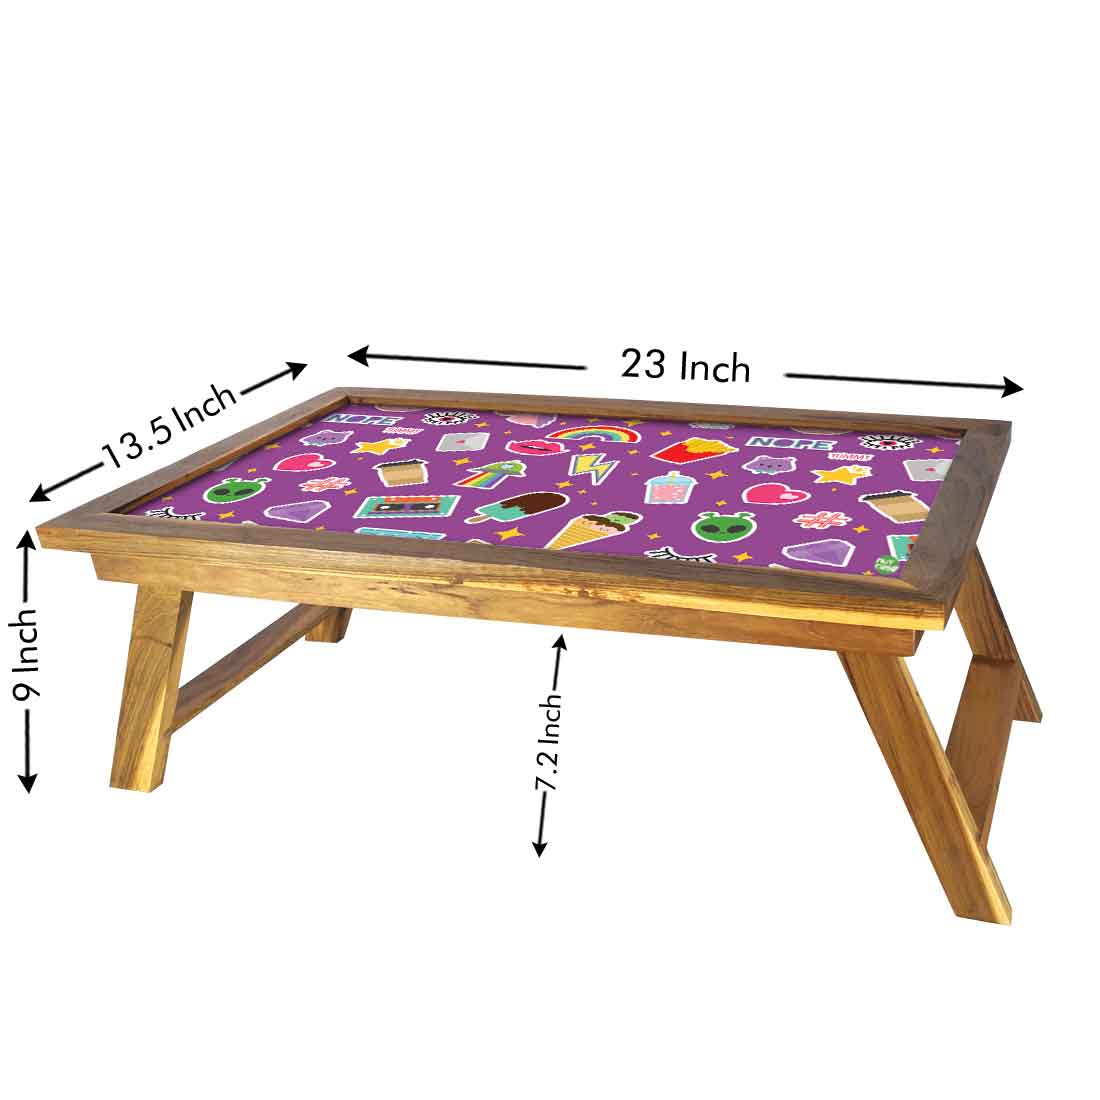 Nutcase Designer Folding Breakfast in Bed Tray Teak Wooden Study Desk - Kids Food Love Nutcase